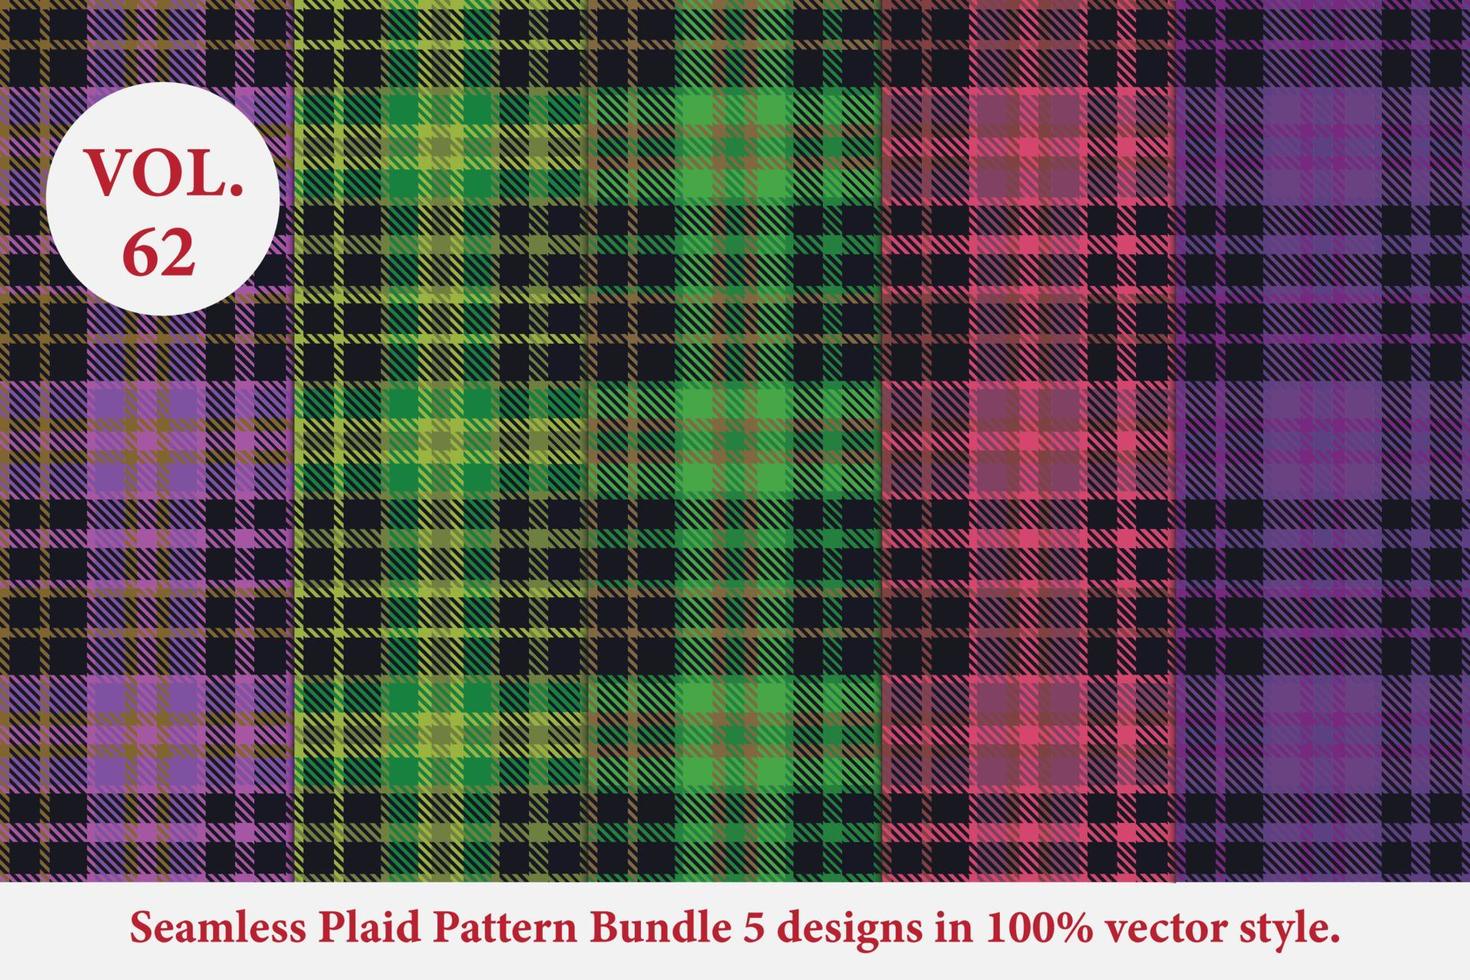 Plaid Pattern Vector, Tartan Fabric background vector